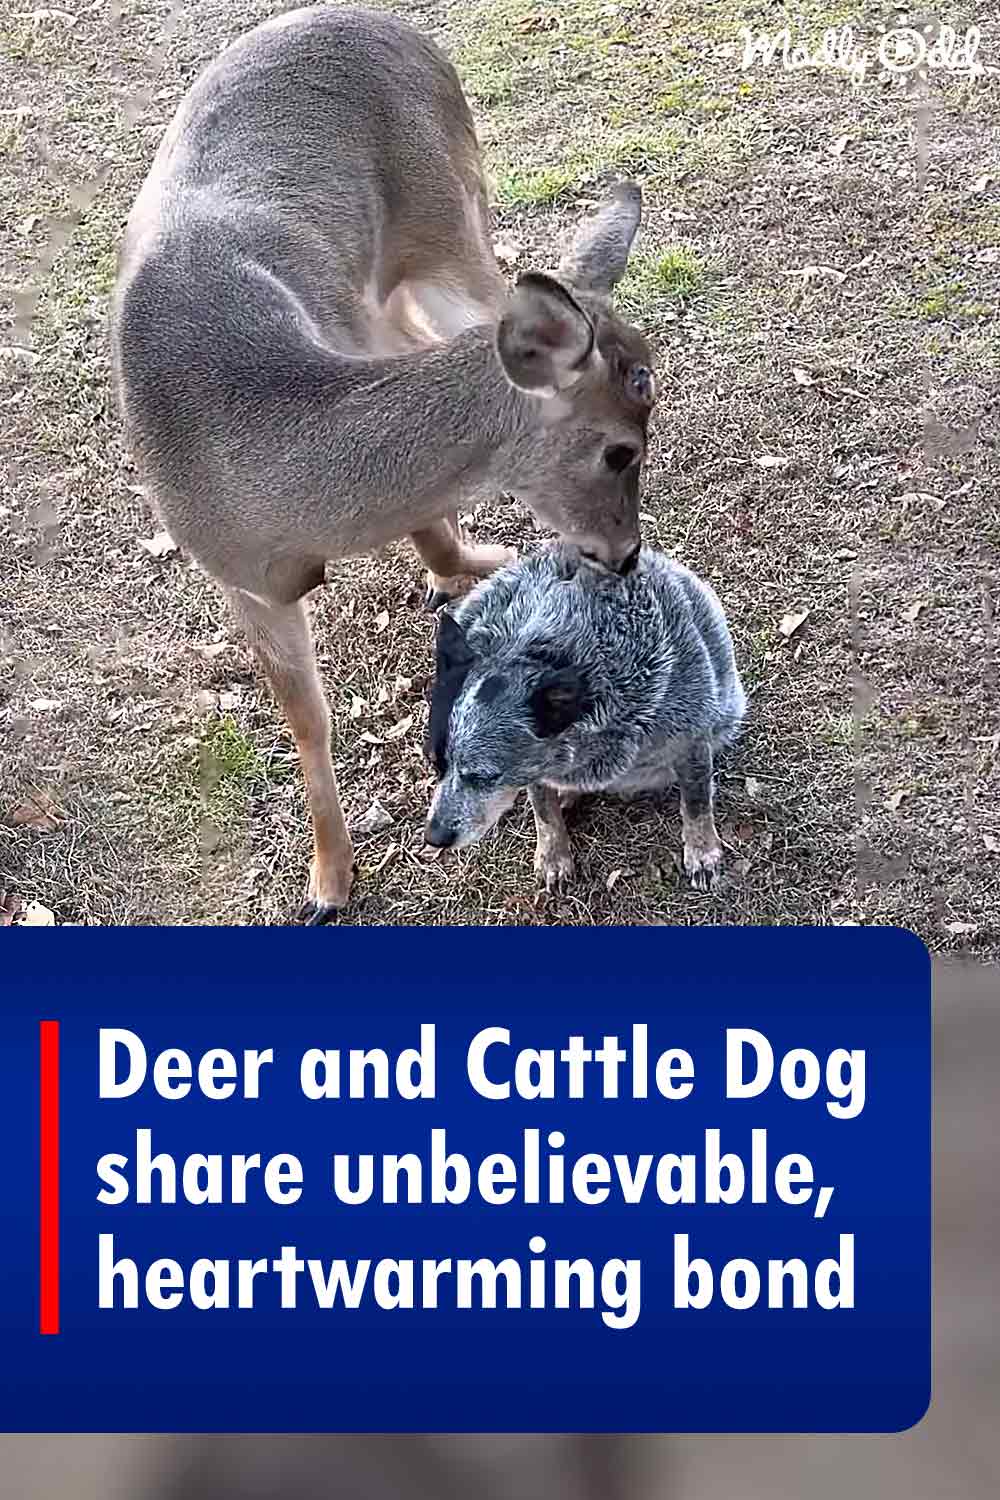 Deer and Cattle Dog share unbelievable, heartwarming bond